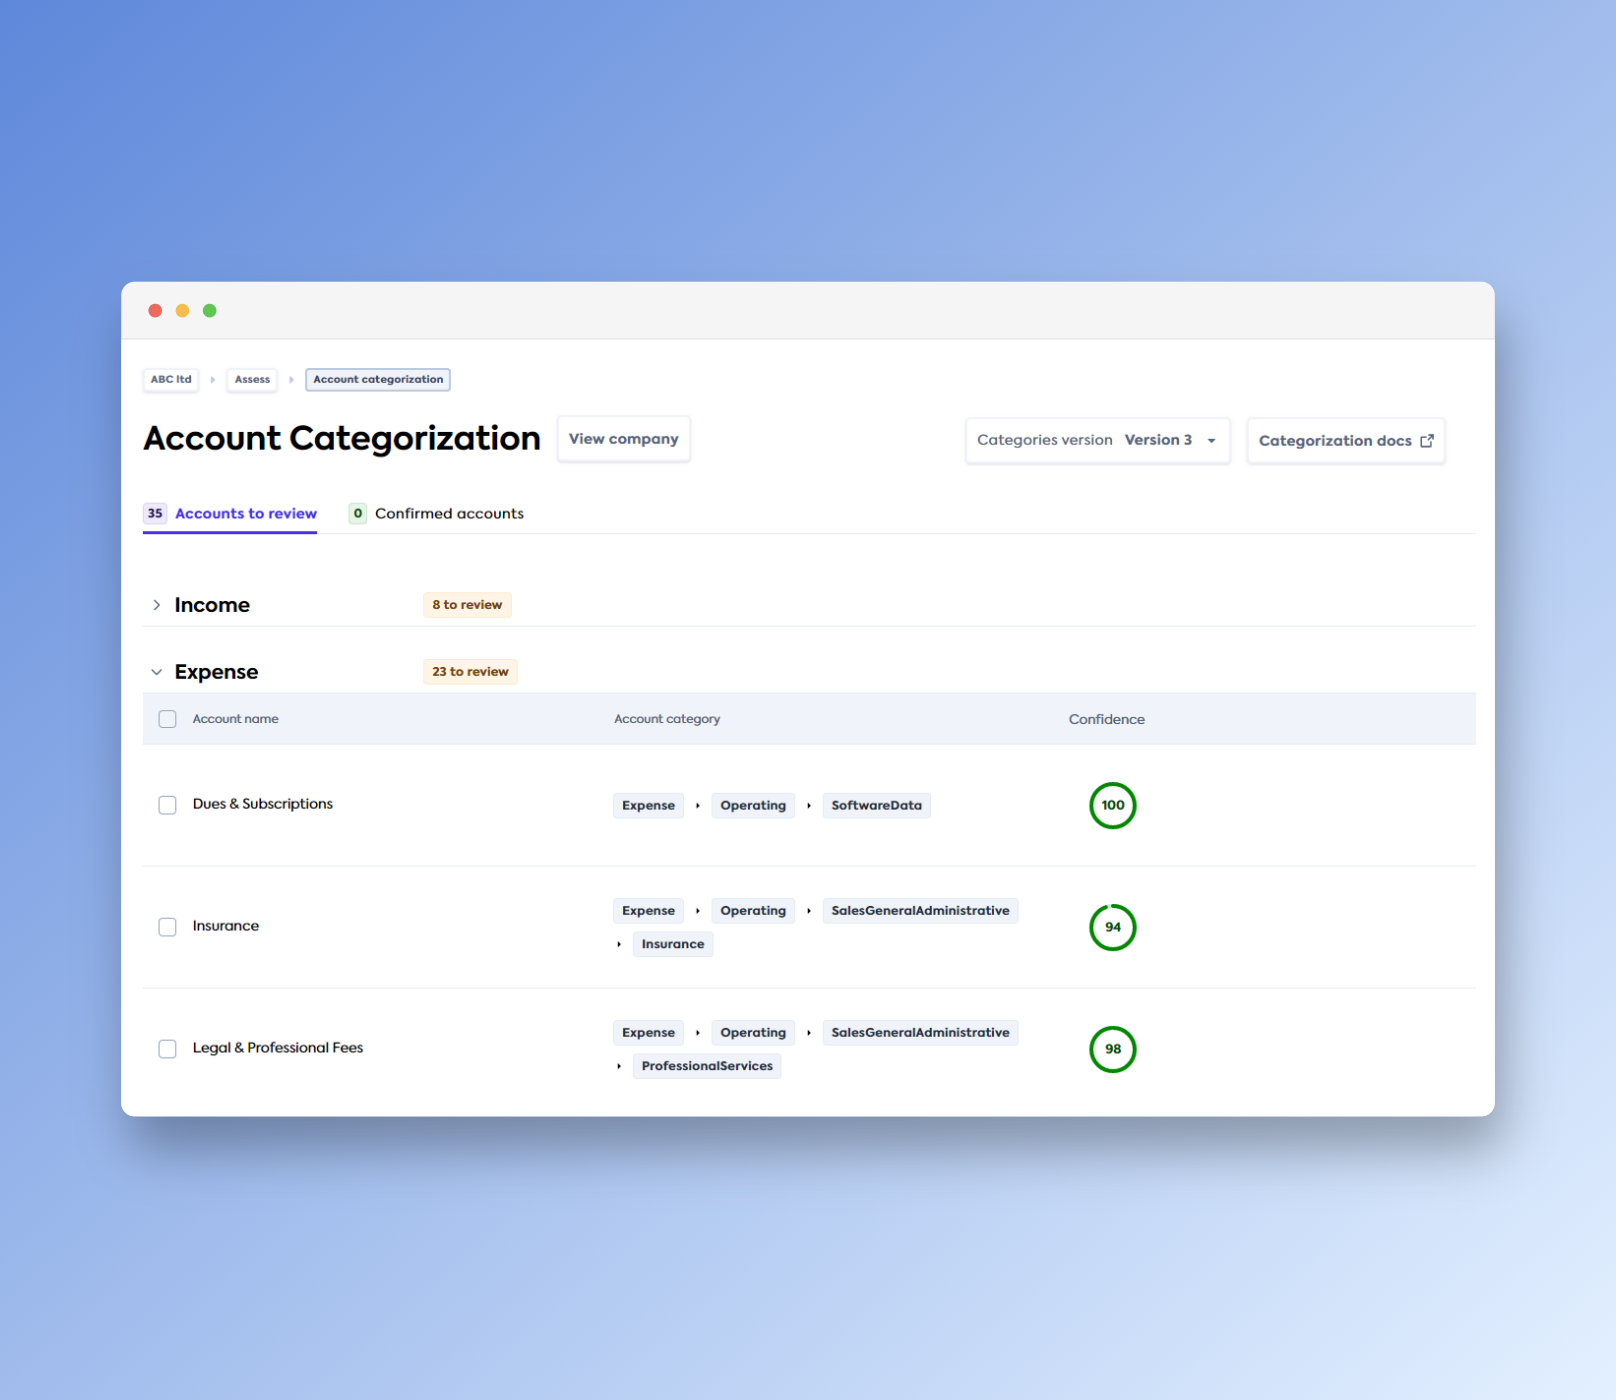 Screenshot of account categorization screen in the portal